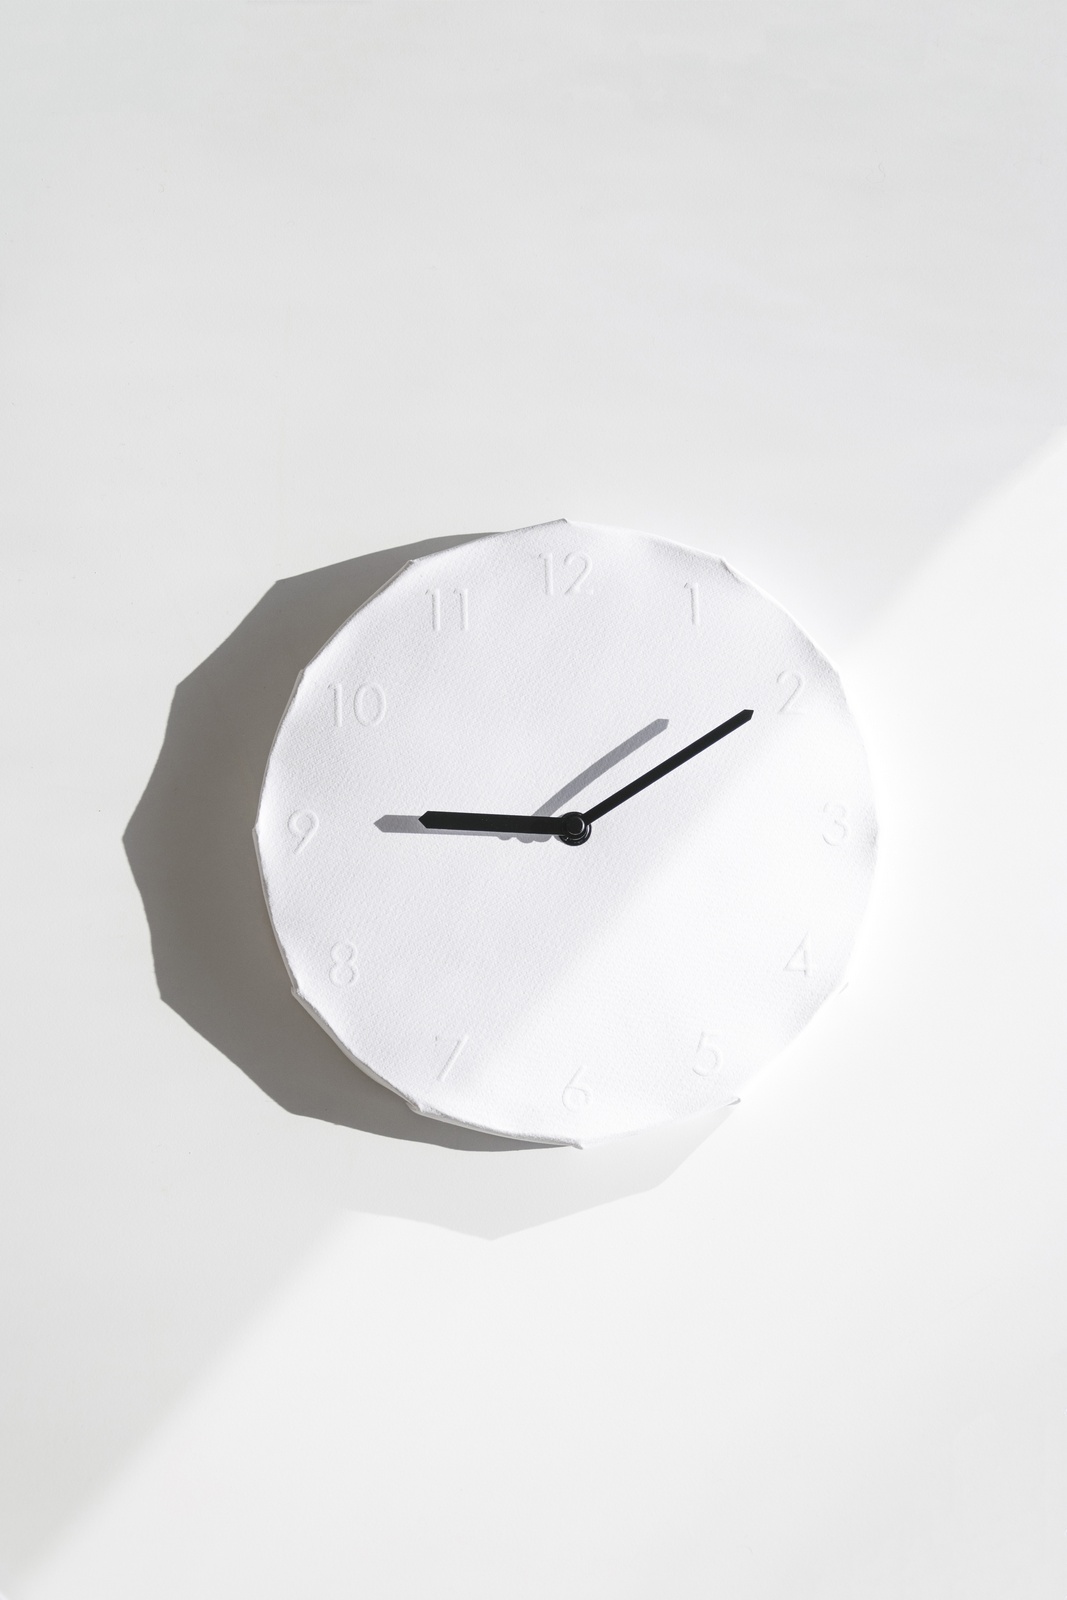 paper clock akaru-sa product design industrial Stéfanie Kay ecal shadows 